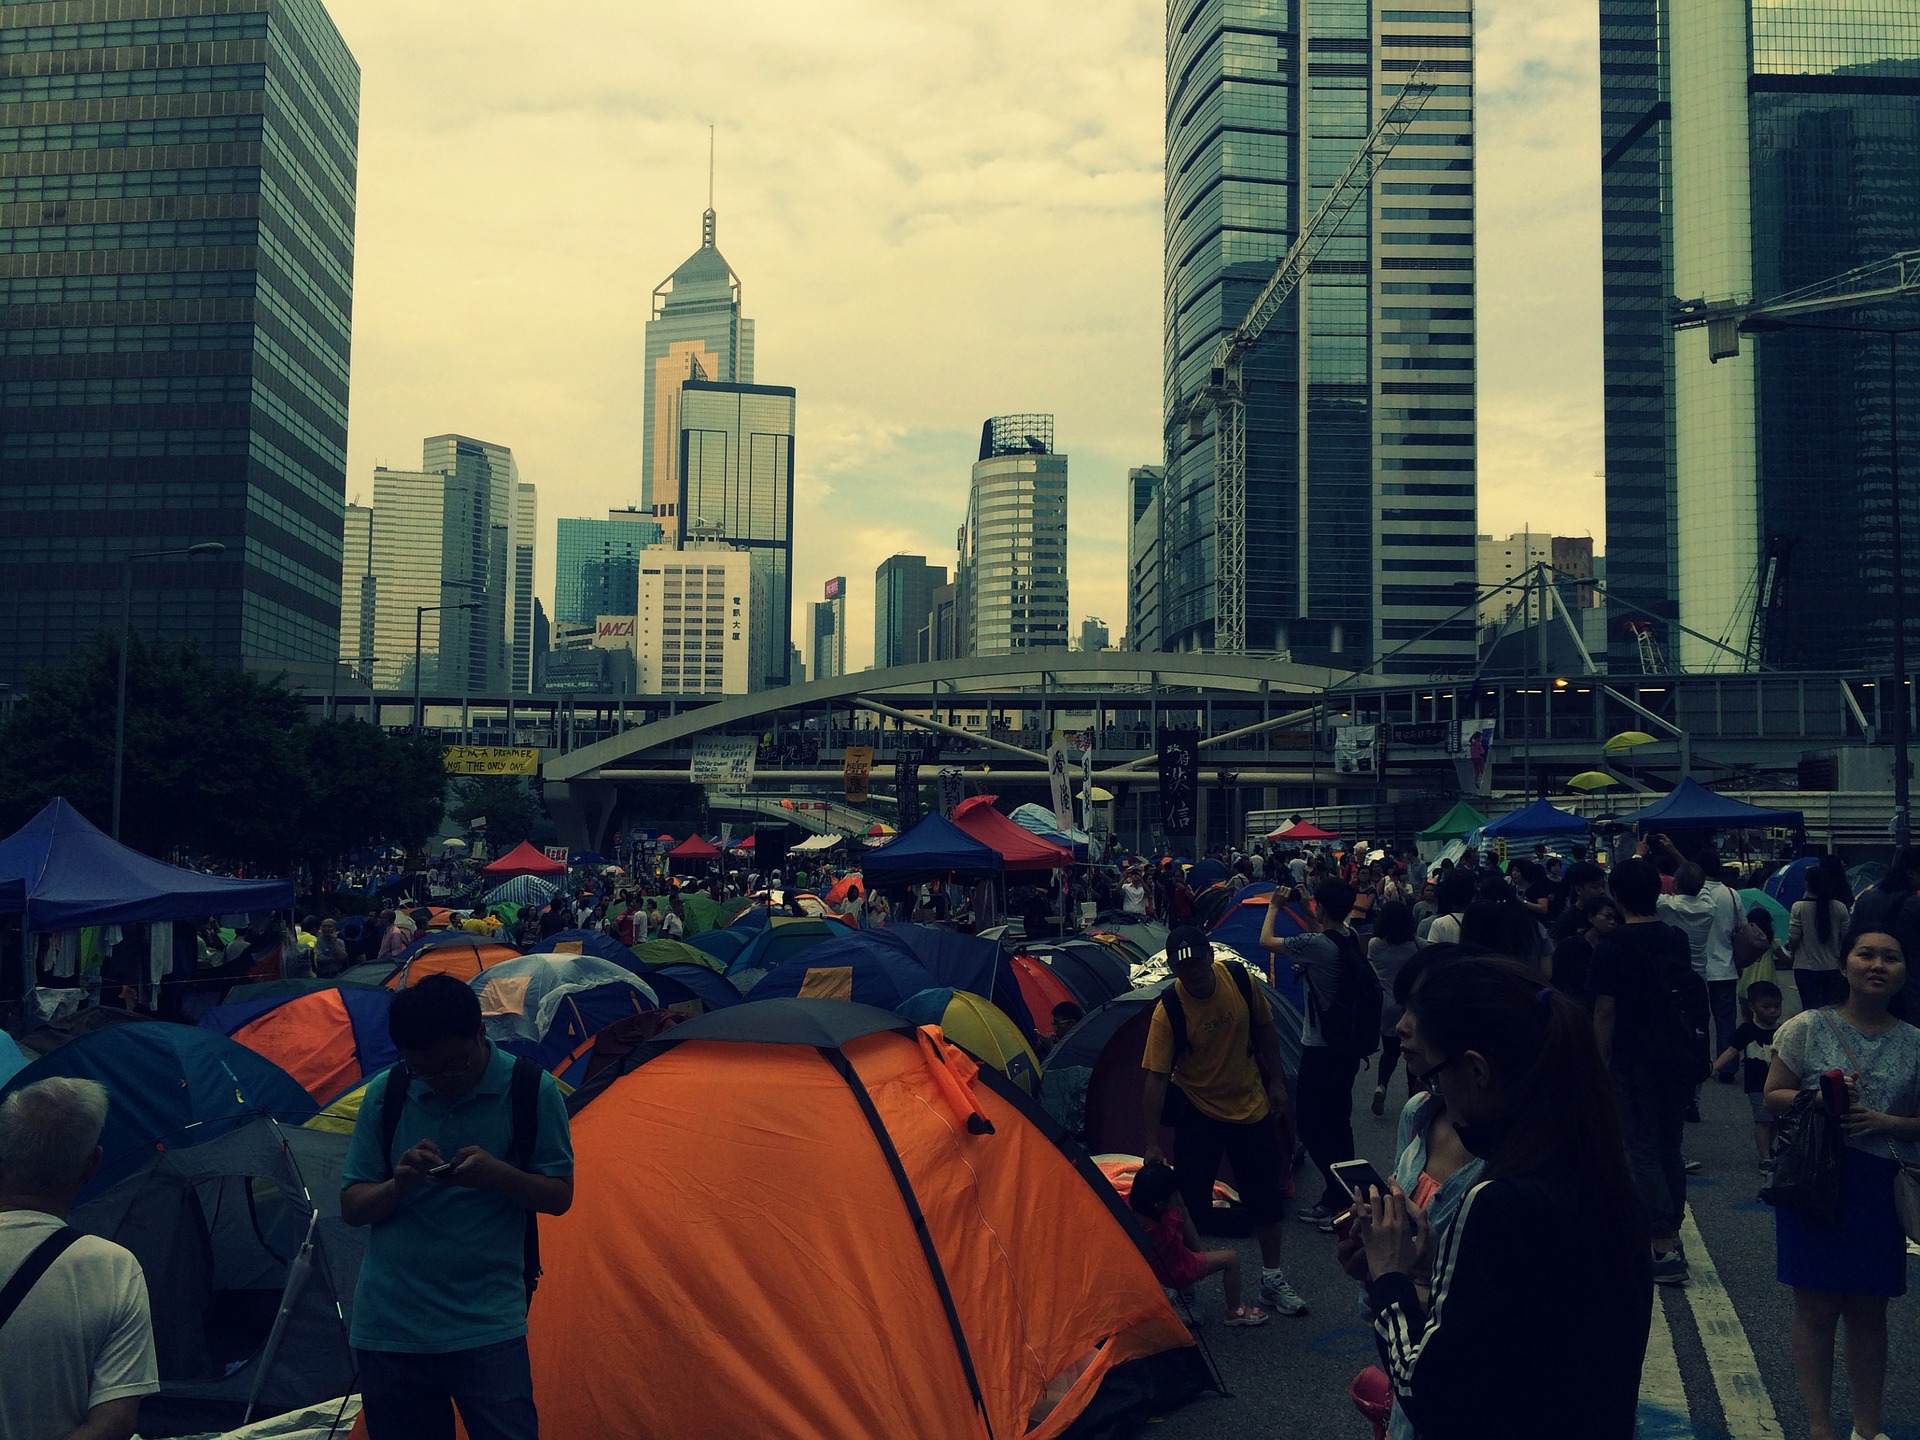 Tent protests in Hong Kong